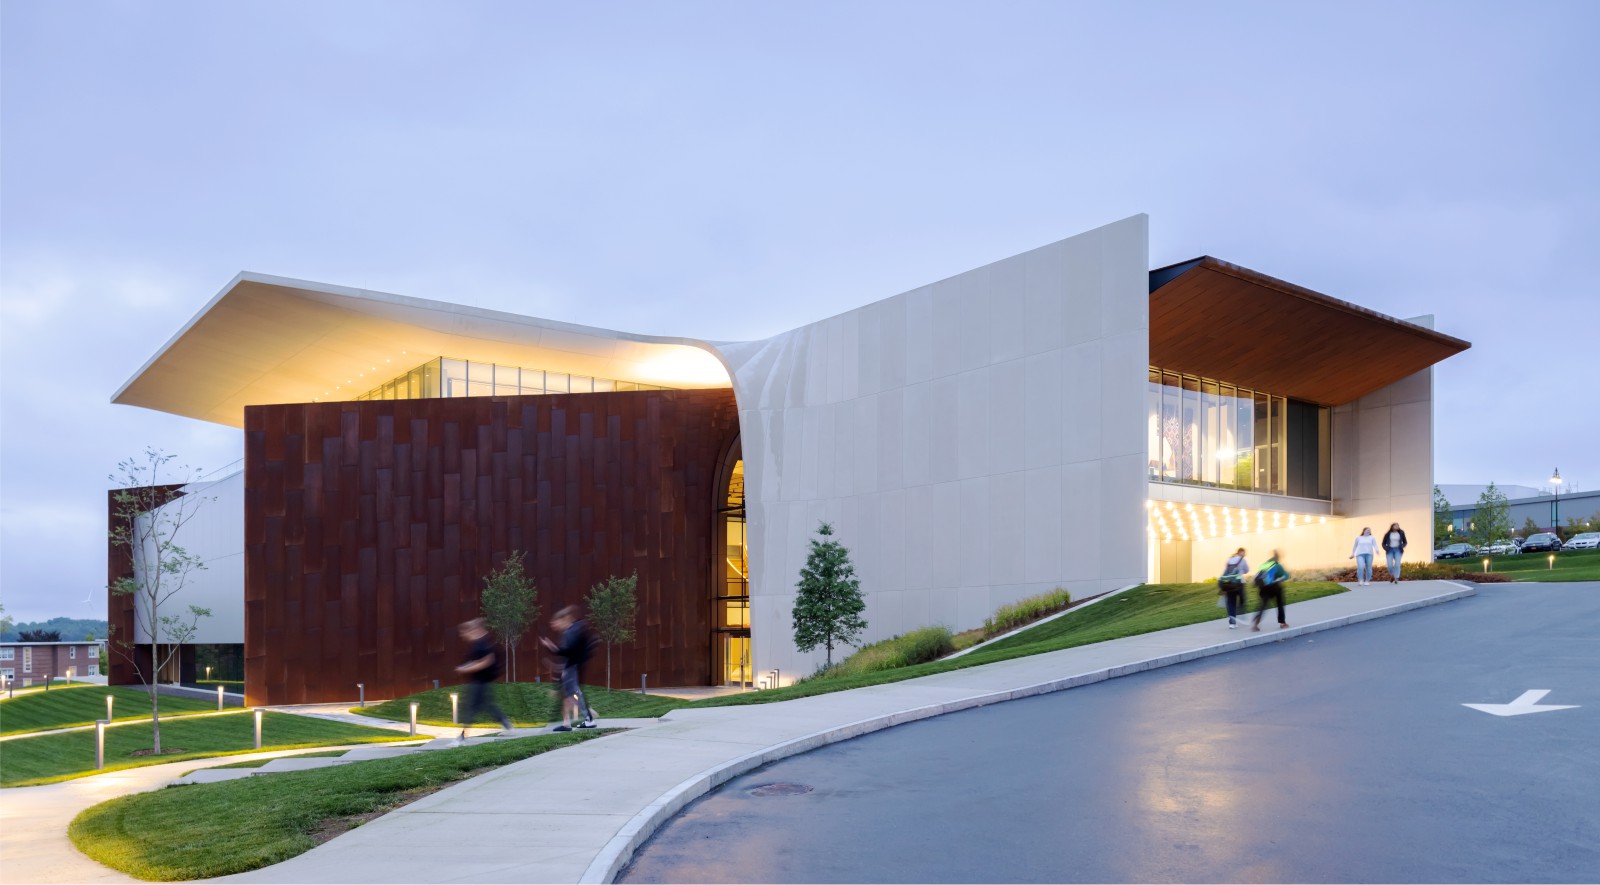 Prior Performing Arts Center design by Diller Scofidio + Renfro